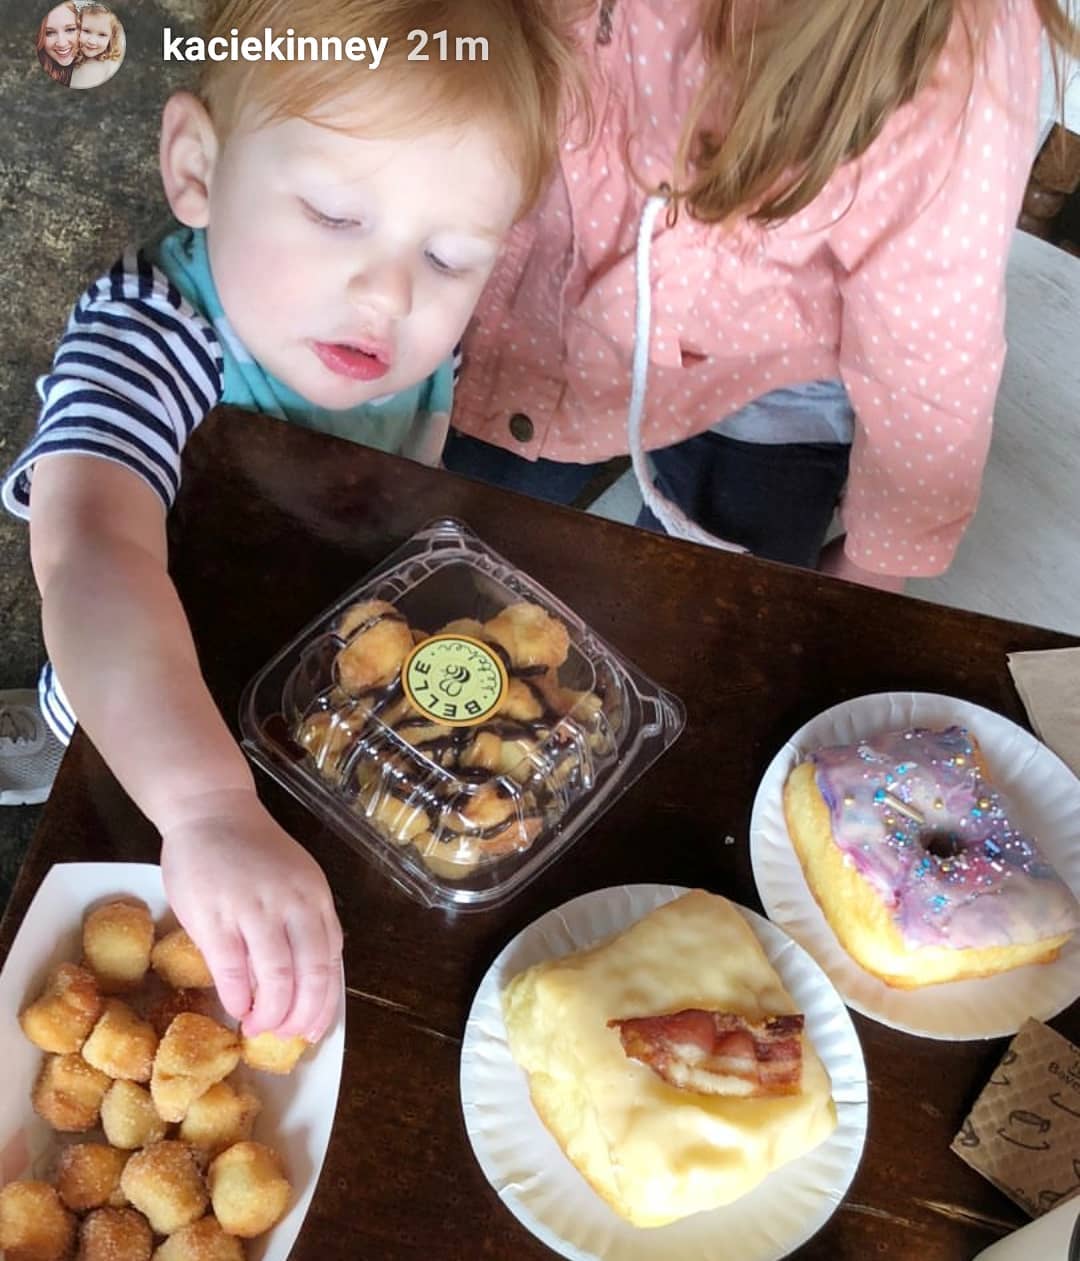 @kaciekinney Snuggle bug love Belle! Thanks for coming in 😄
#kids #okckids #okcmoms #doughnut #doughnuts #donut #donuts #belle #beautiful #bellekitchen